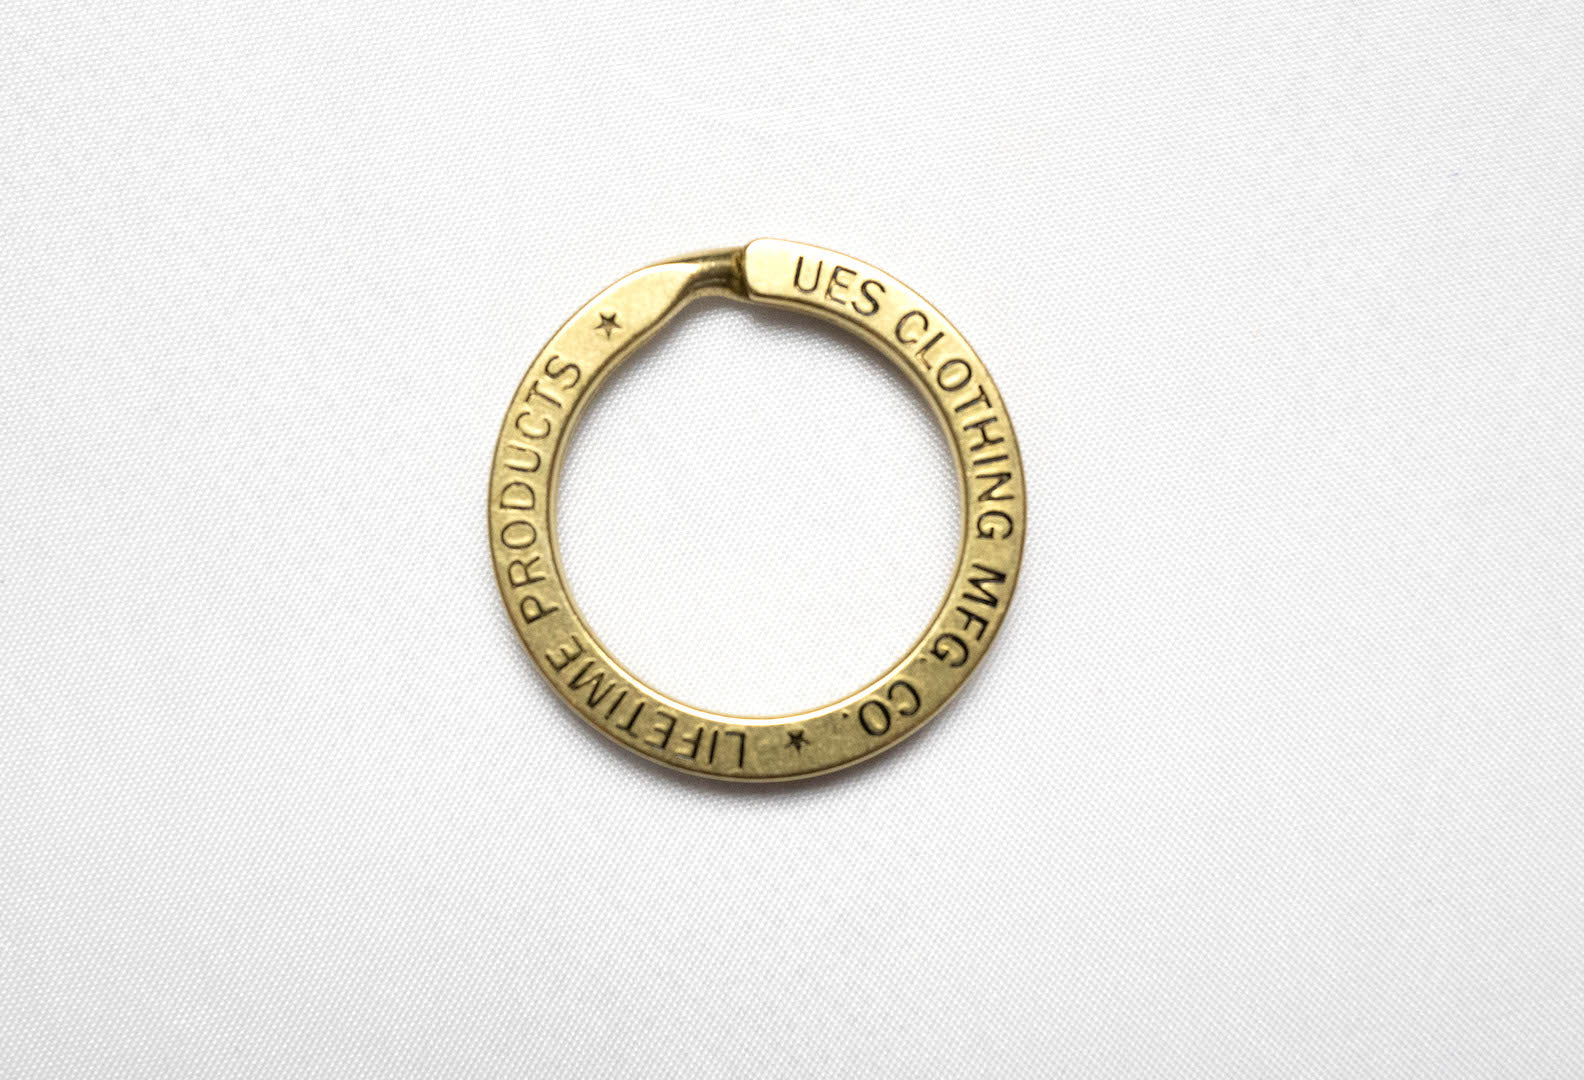 UES "Lifetime" Copper Key Ring